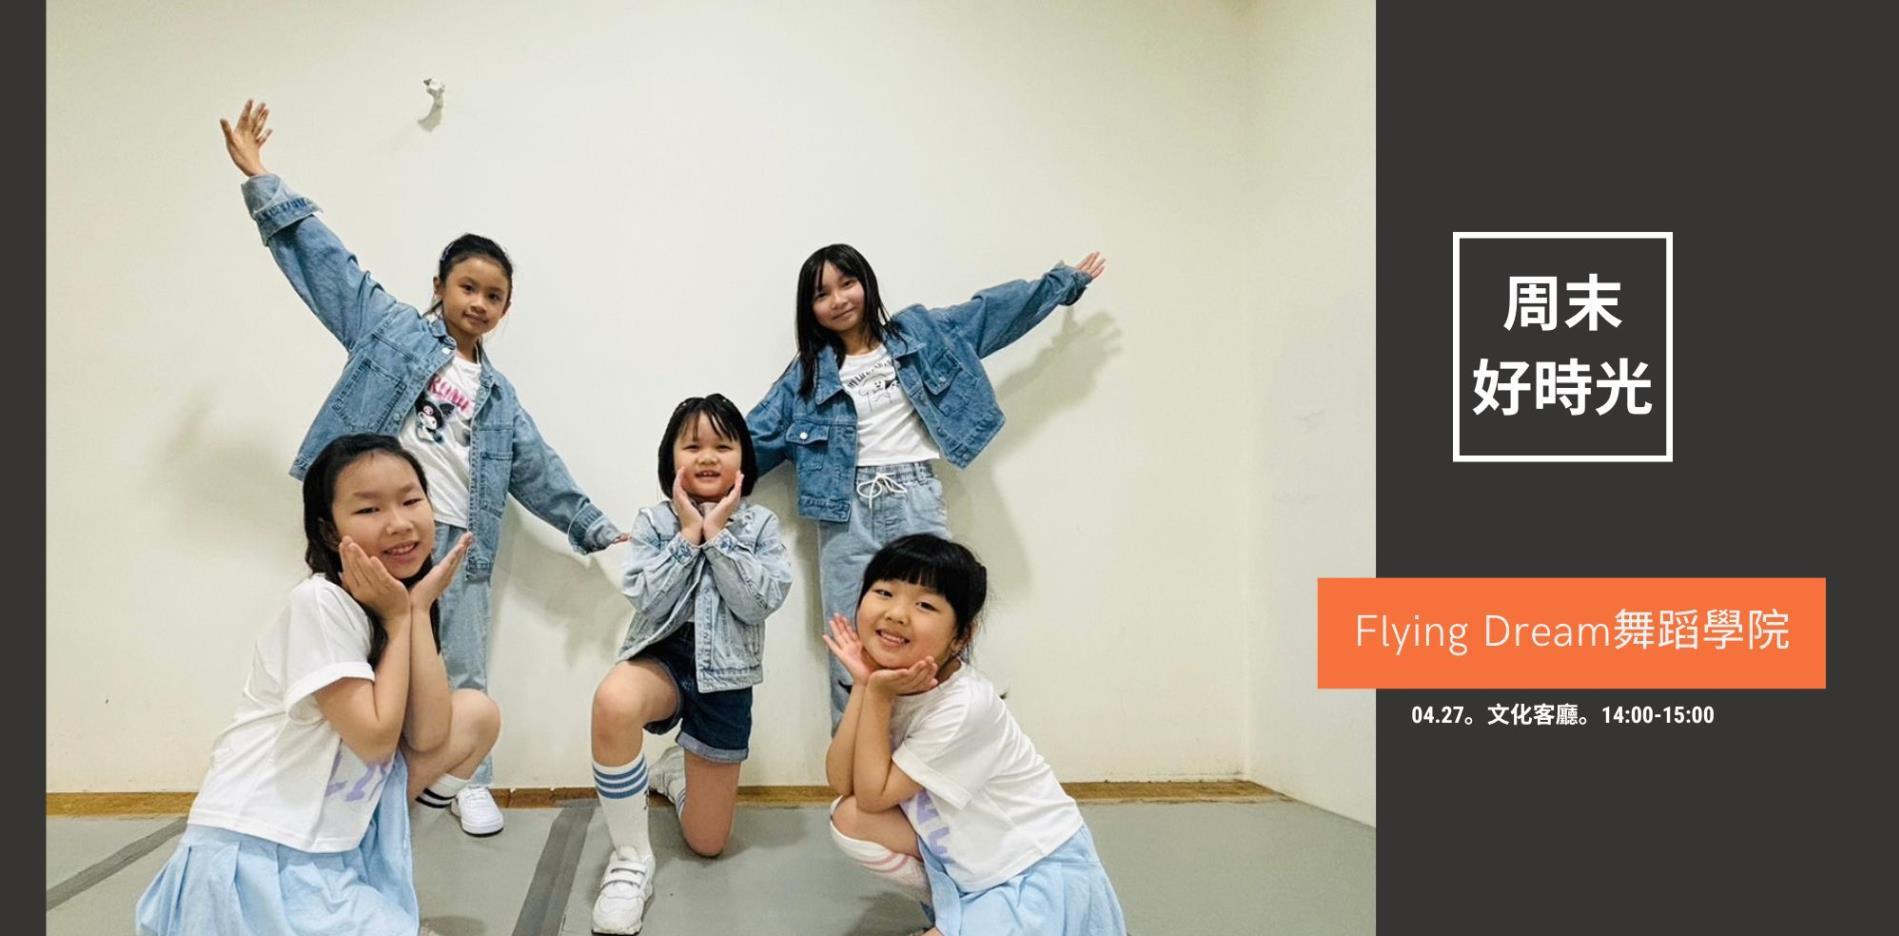 04.27(六) | 周末好時光-Flying Dream舞蹈學院